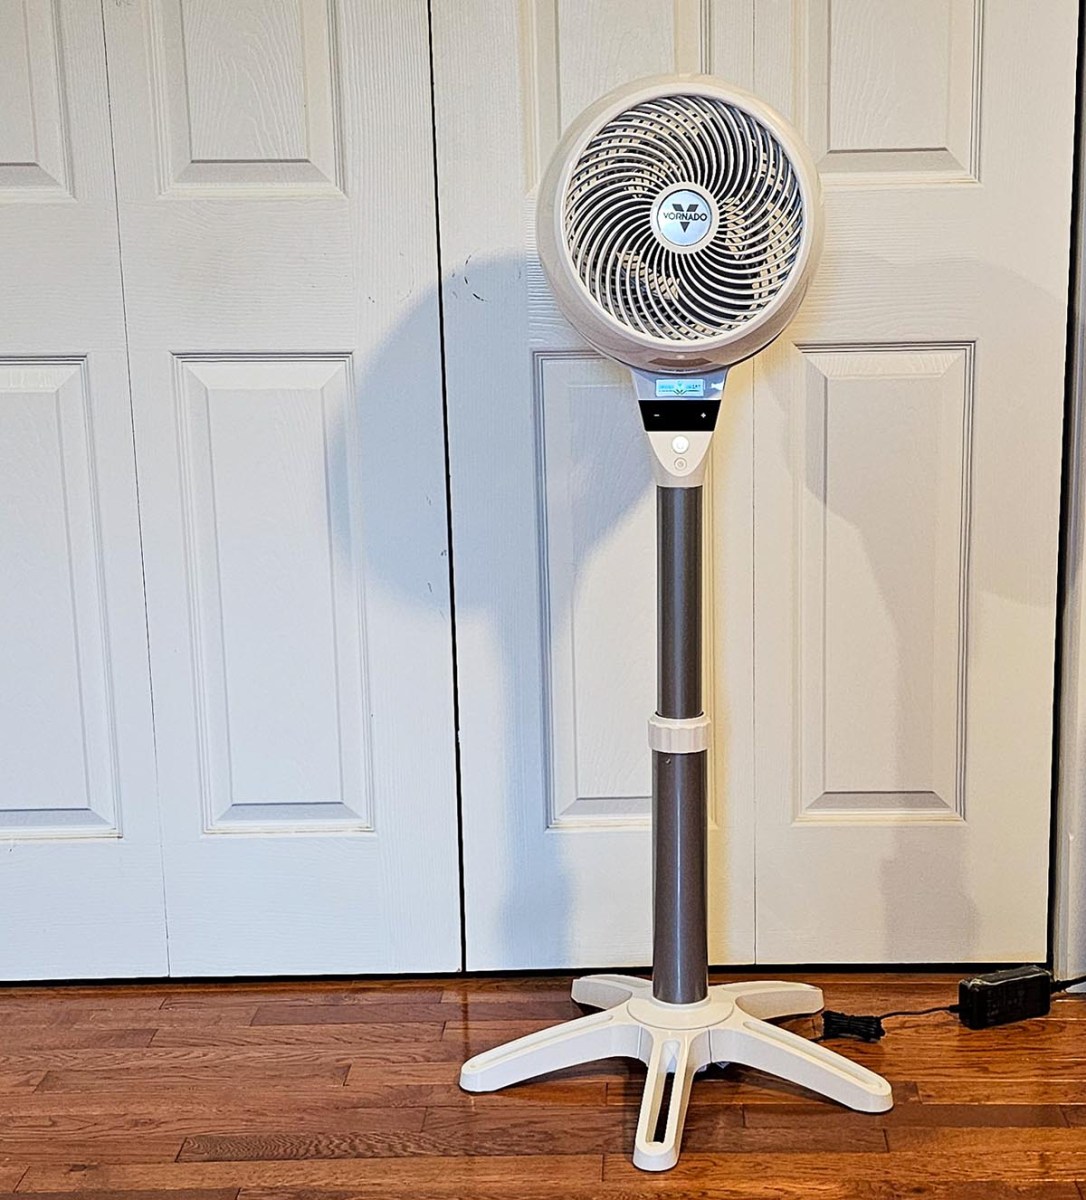 The Vornado pedestal fan in front of closet doors during testing.